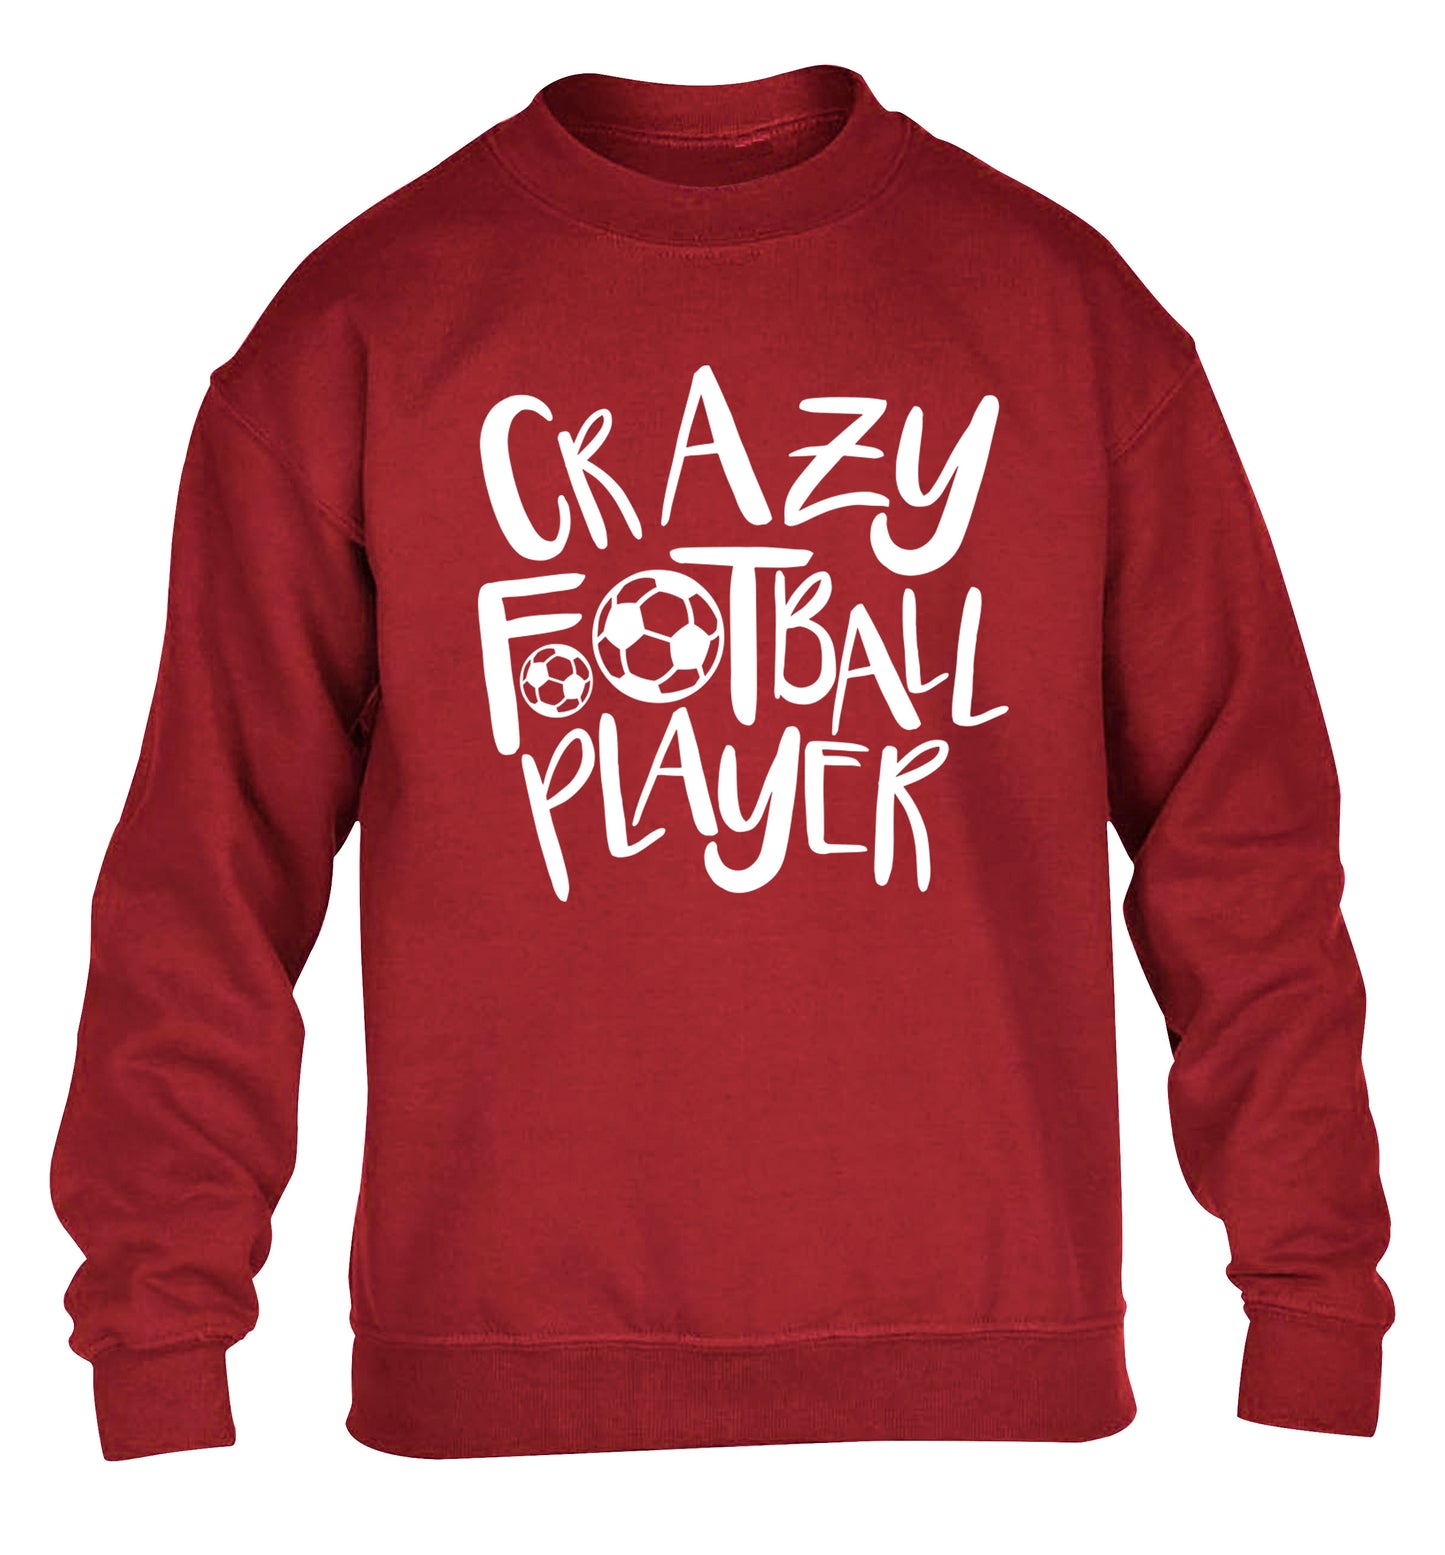 Crazy football player children's grey sweater 12-14 Years